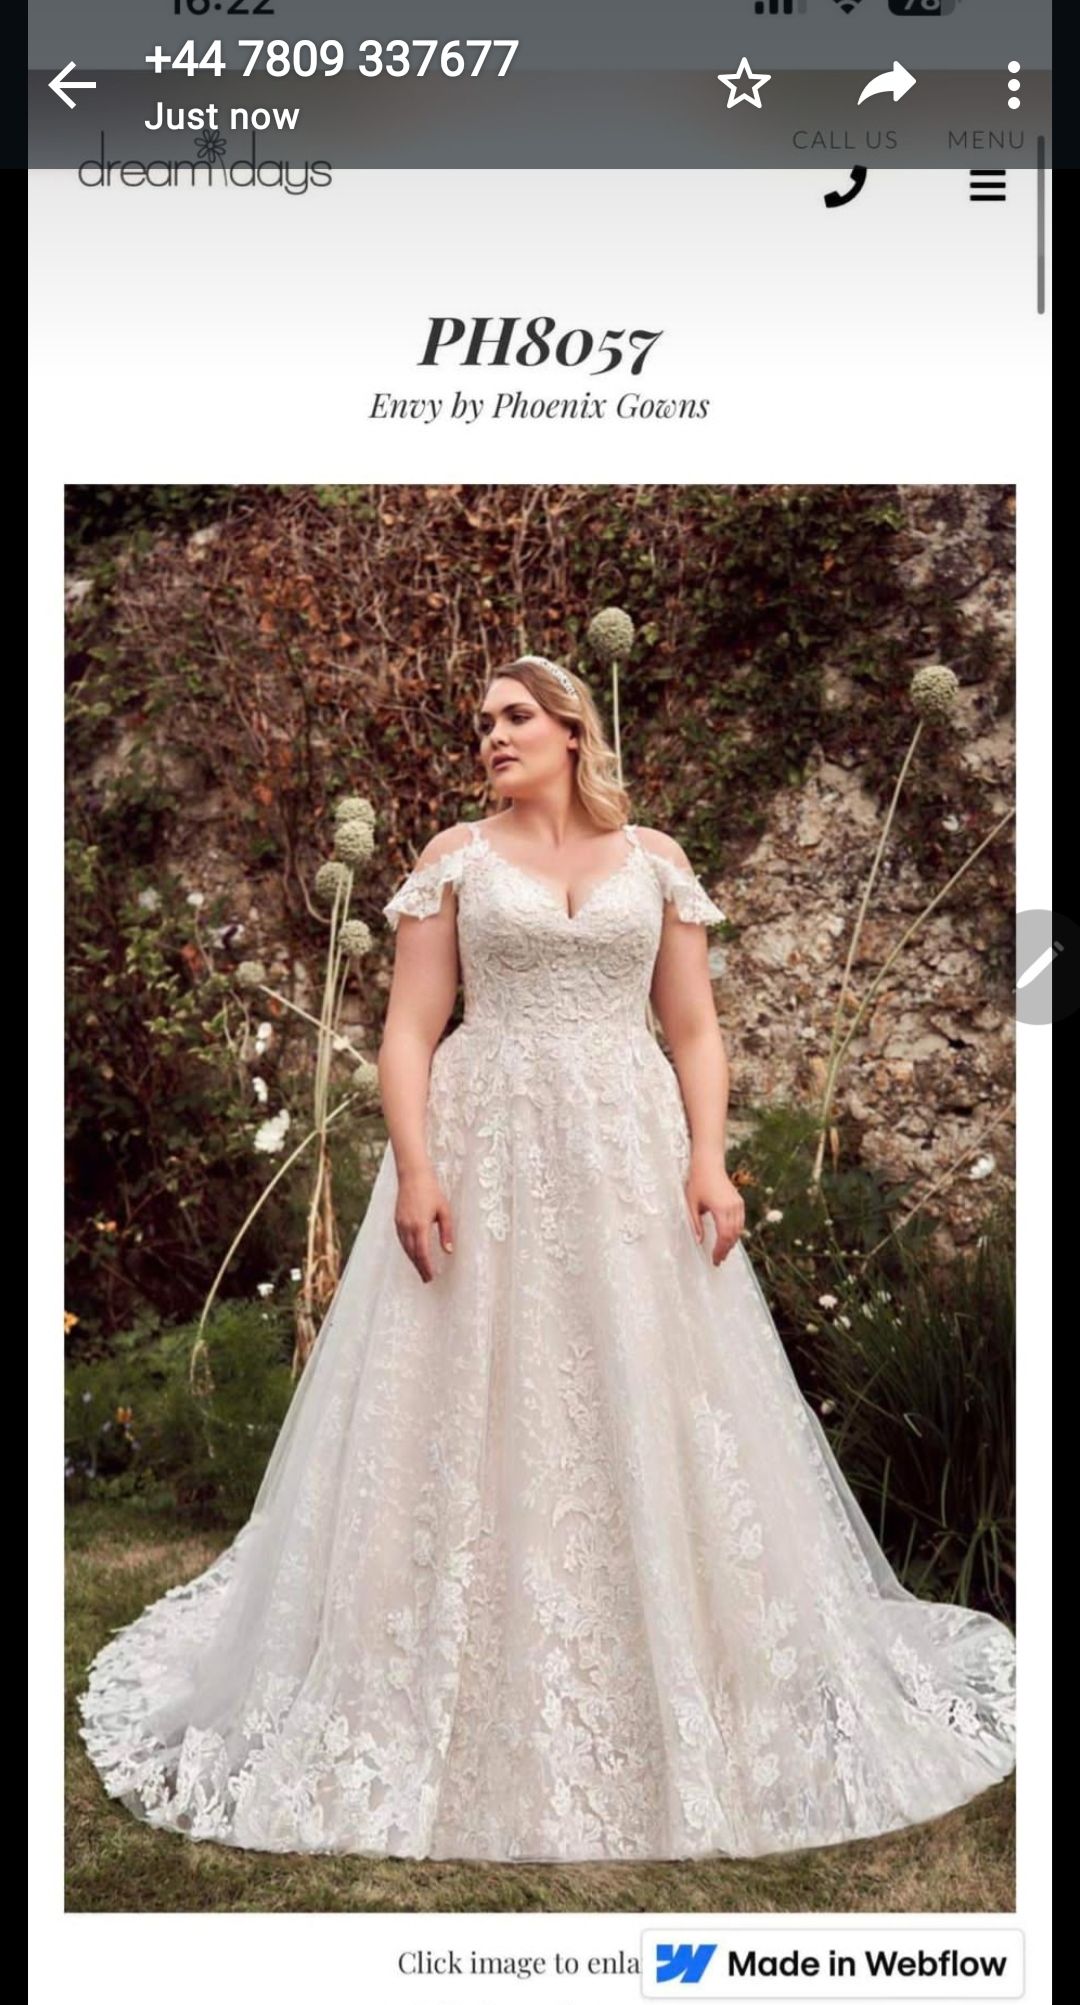 Best Dress 2 Impress Bridal-Image-4